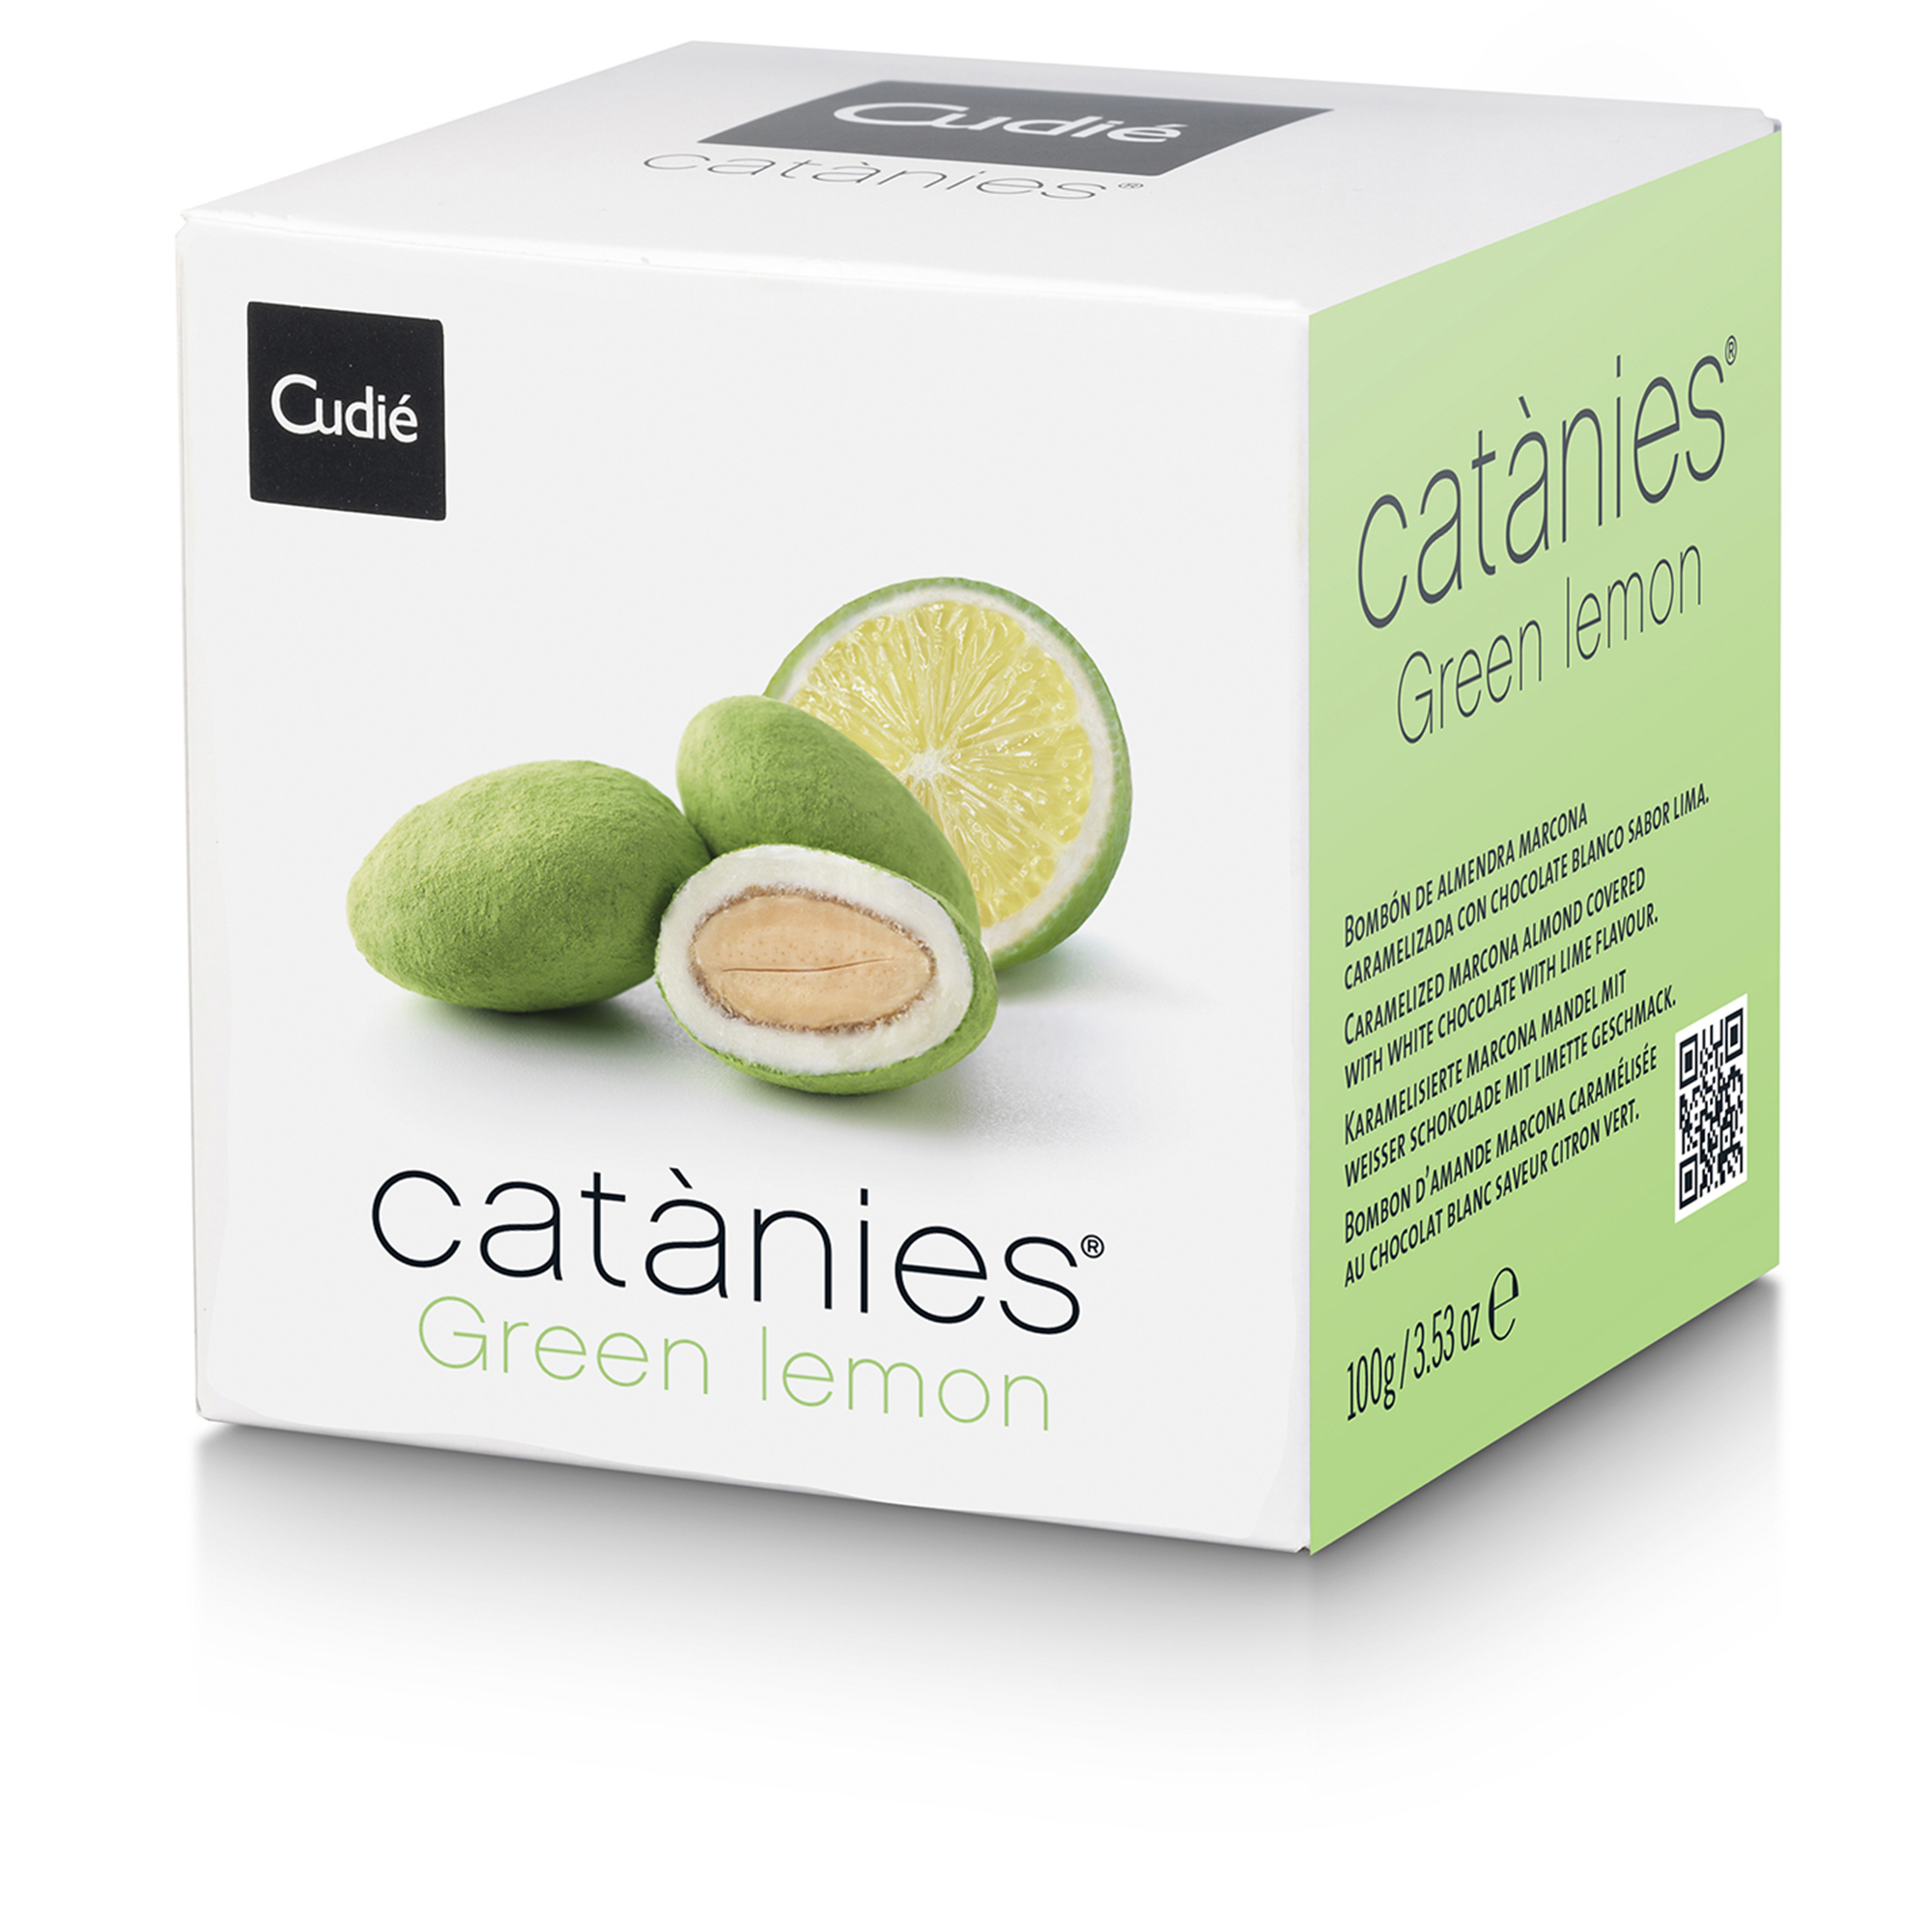 Cudié Catànies® Green Lemon